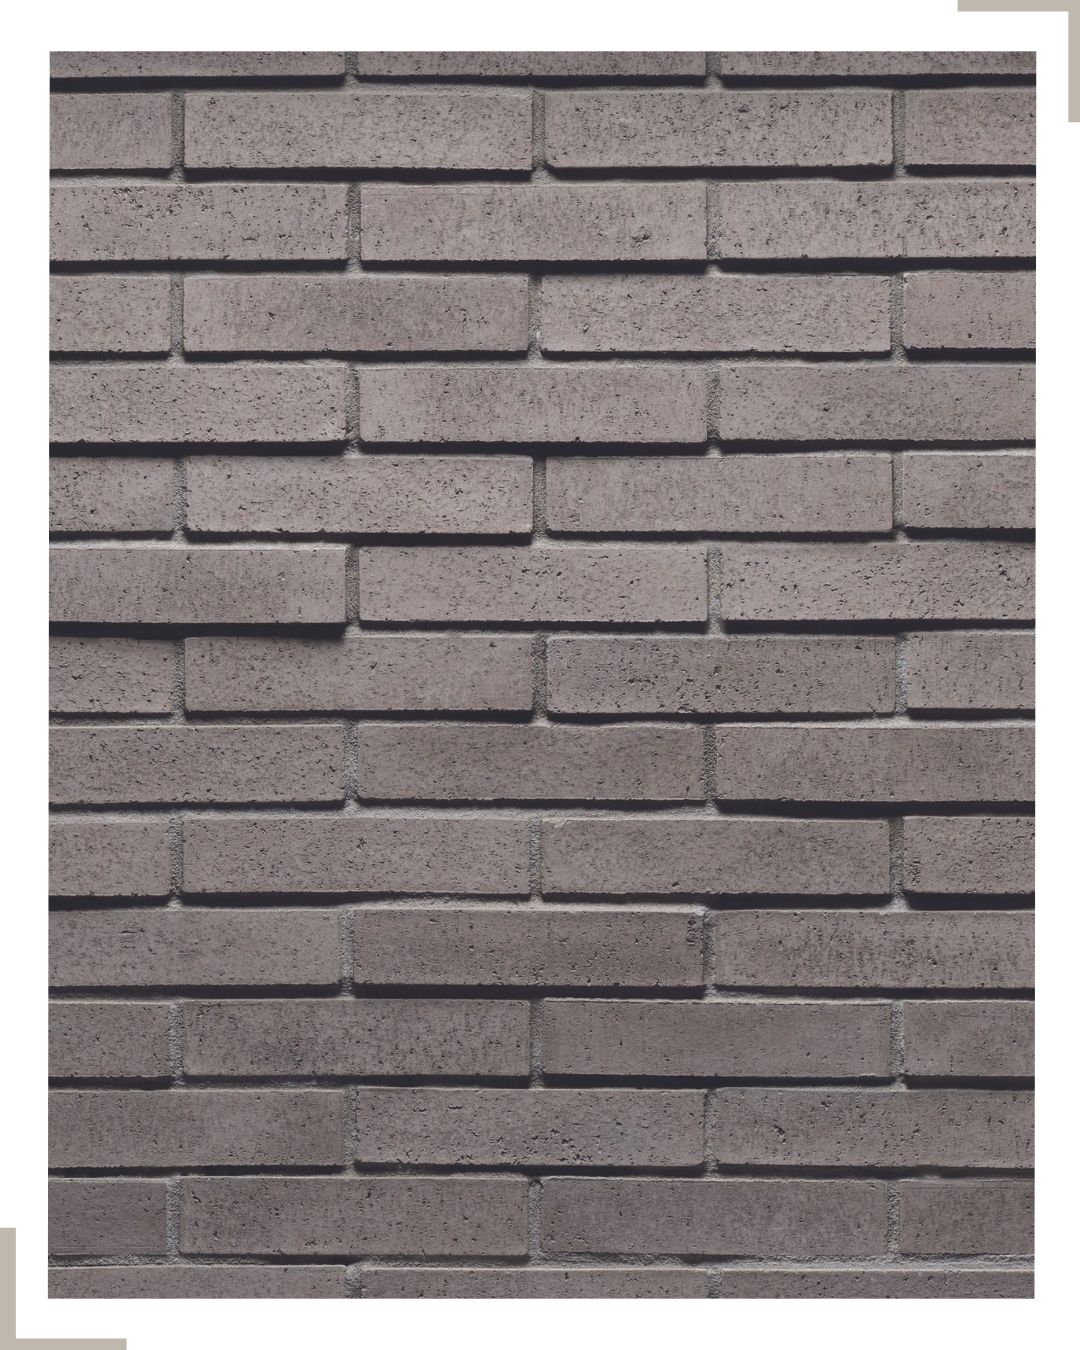 Cultured Stone® - Tenley Brick™, Wildon™